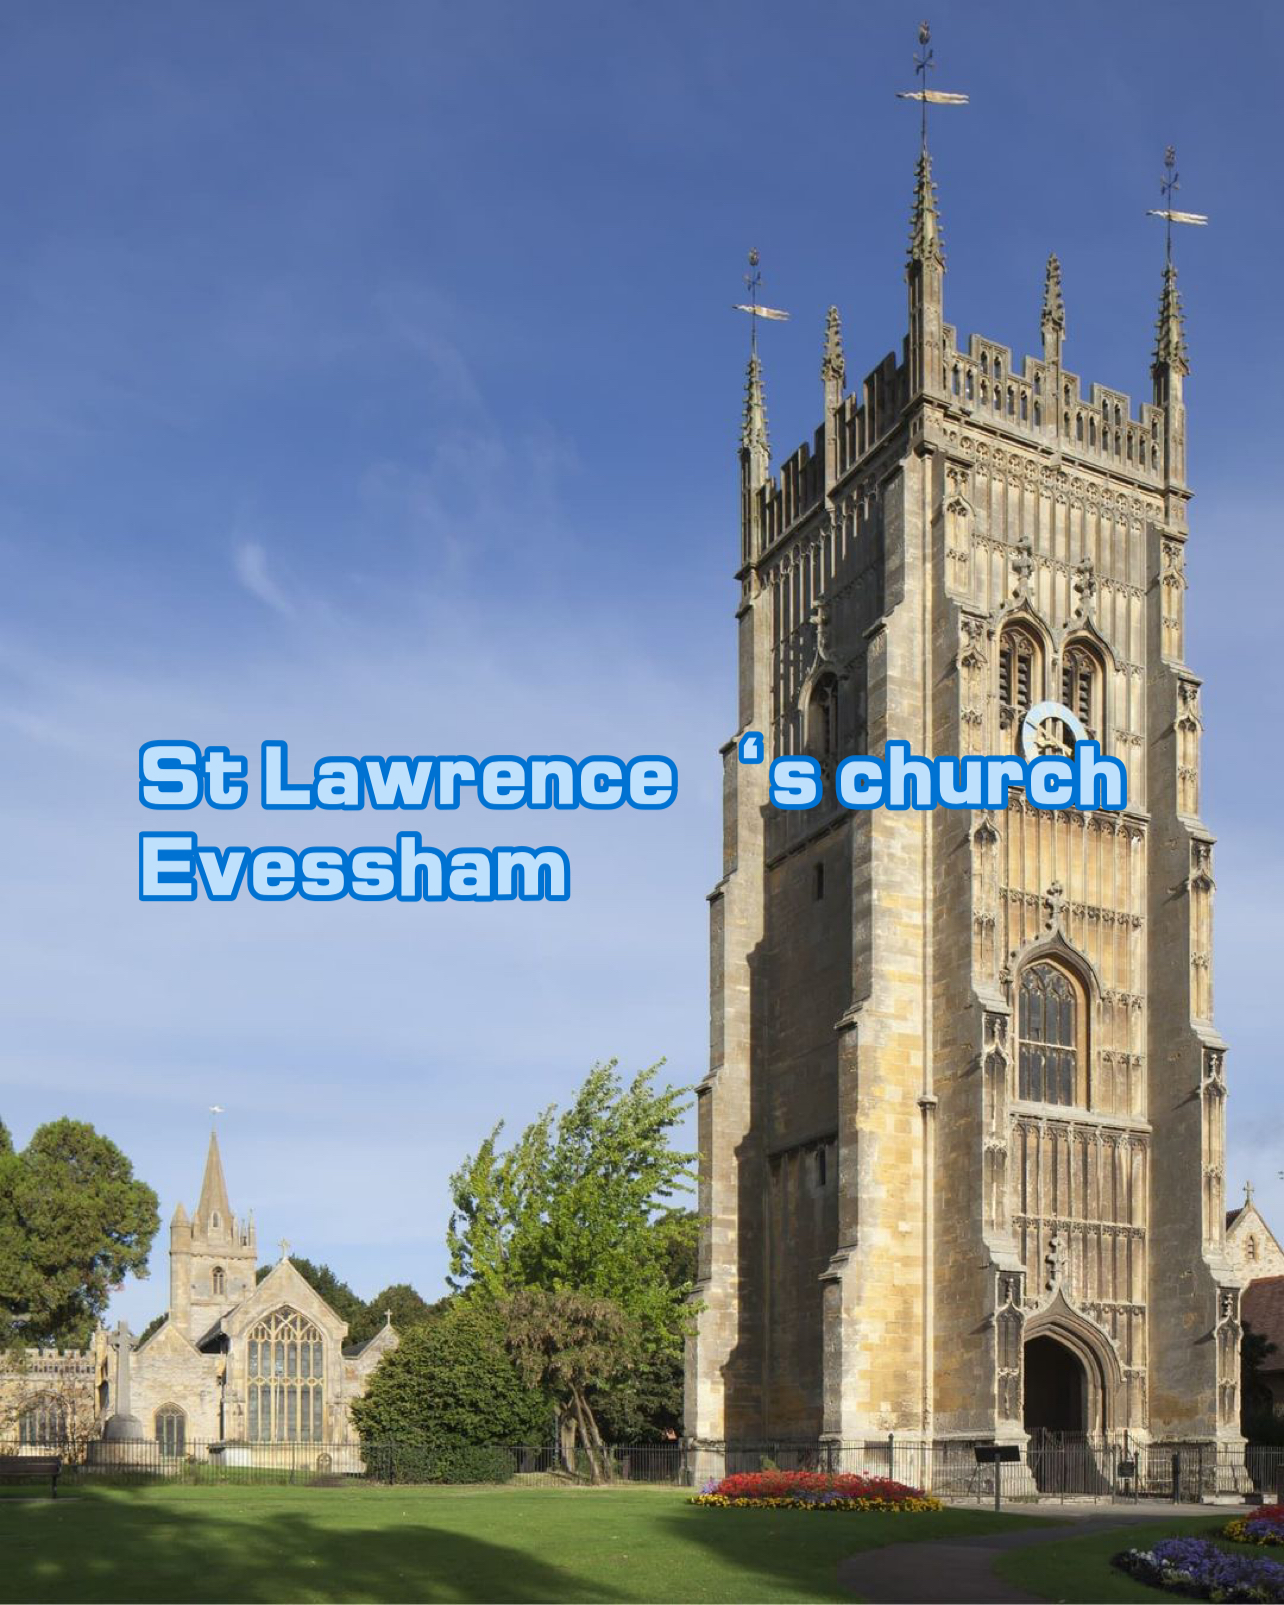 St Lawrence ‘s church Evessham